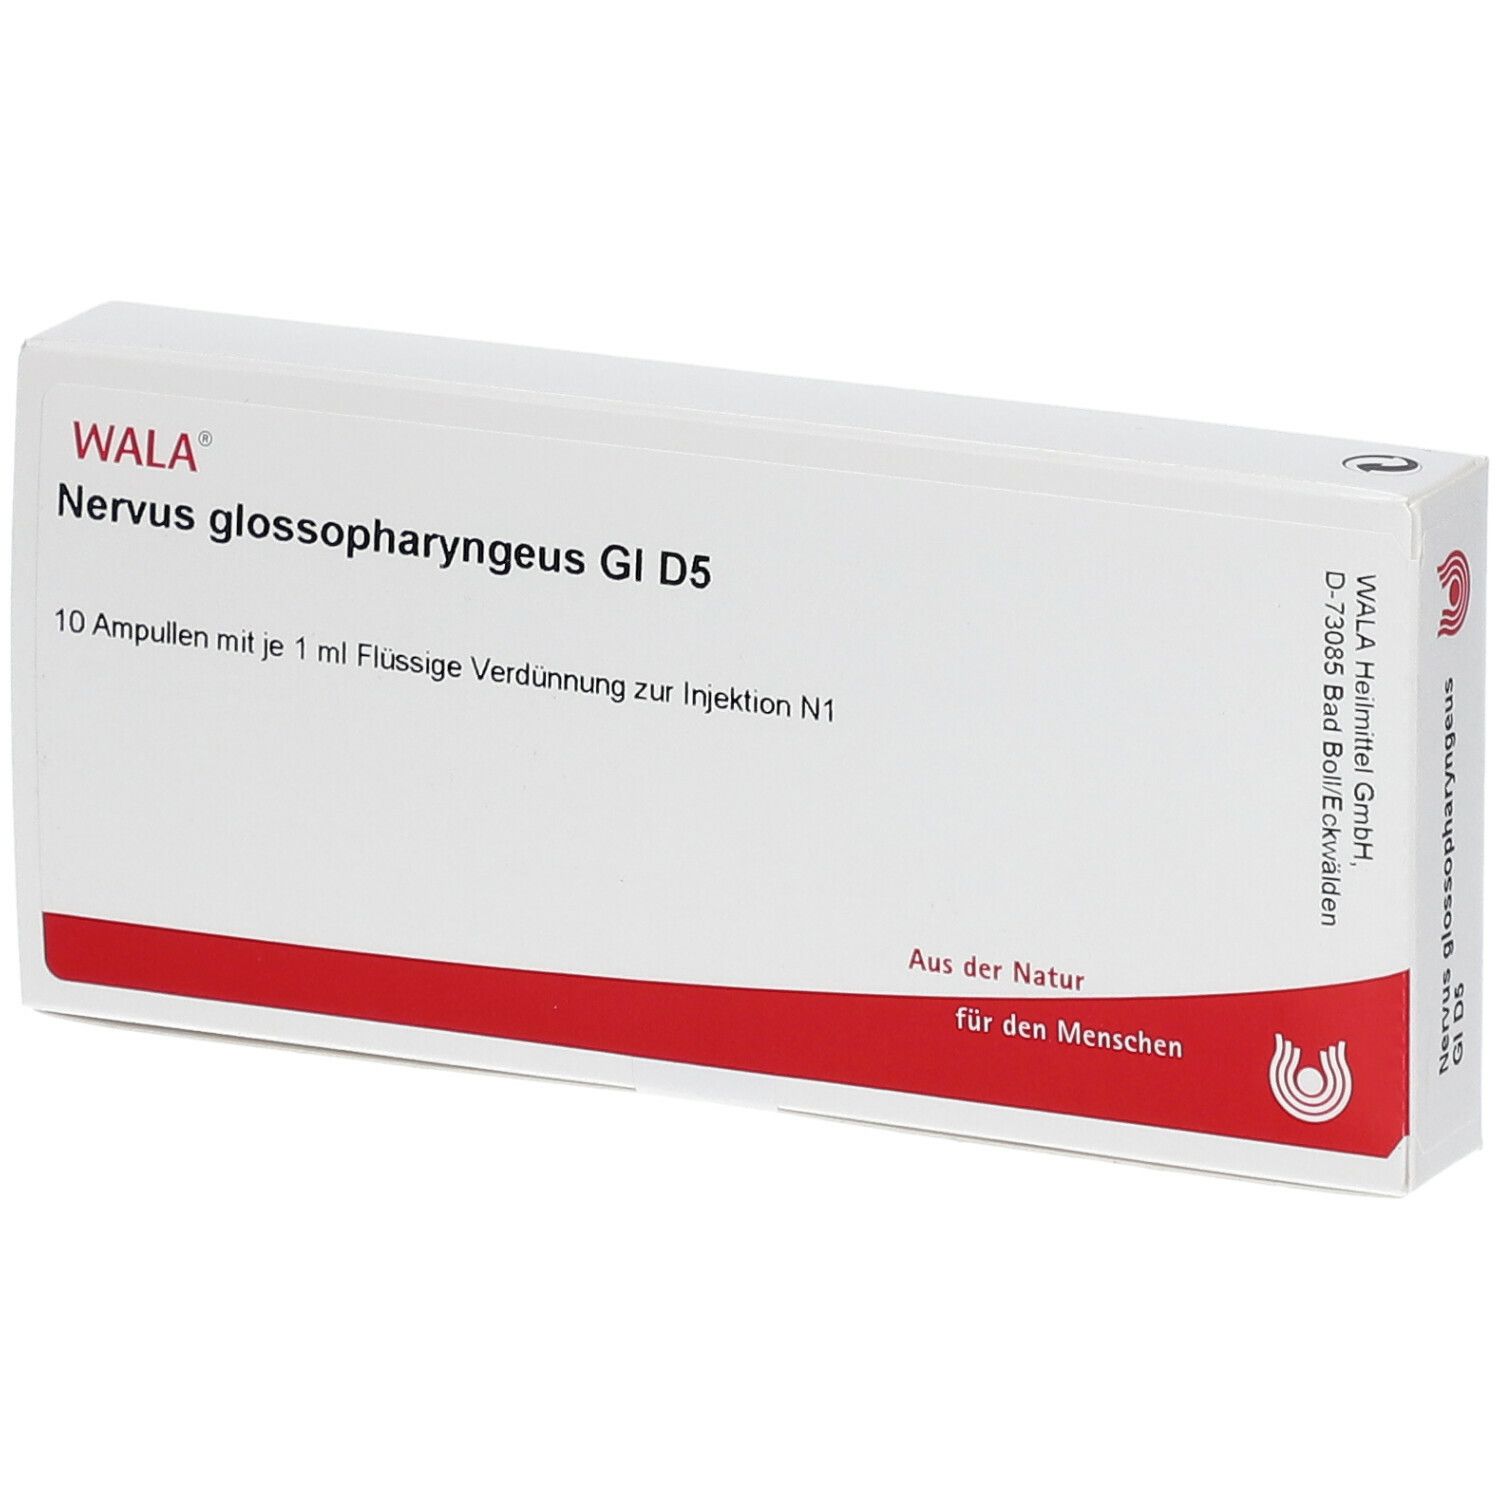 WALA® Nervus glossopharyngeus Gl D 5